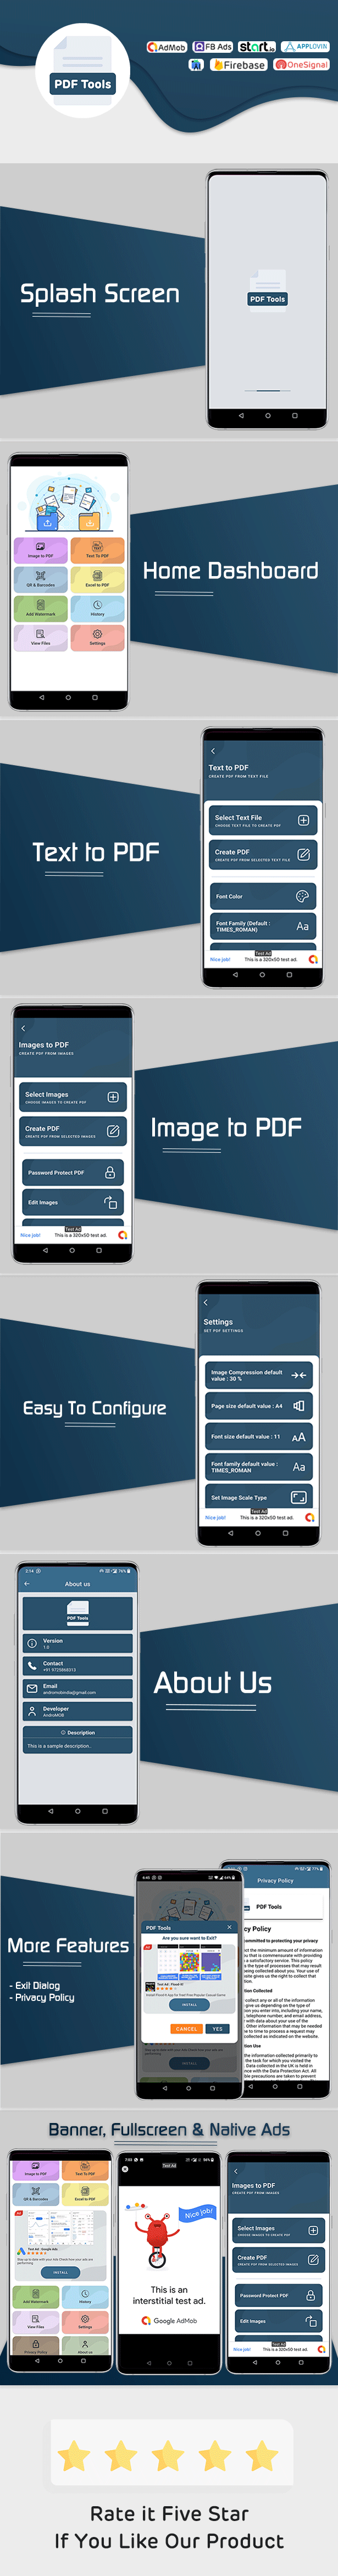 PDF Tools - Android PDF Maker App (Convert Images, Text, Excel, QR to PDF) - 1